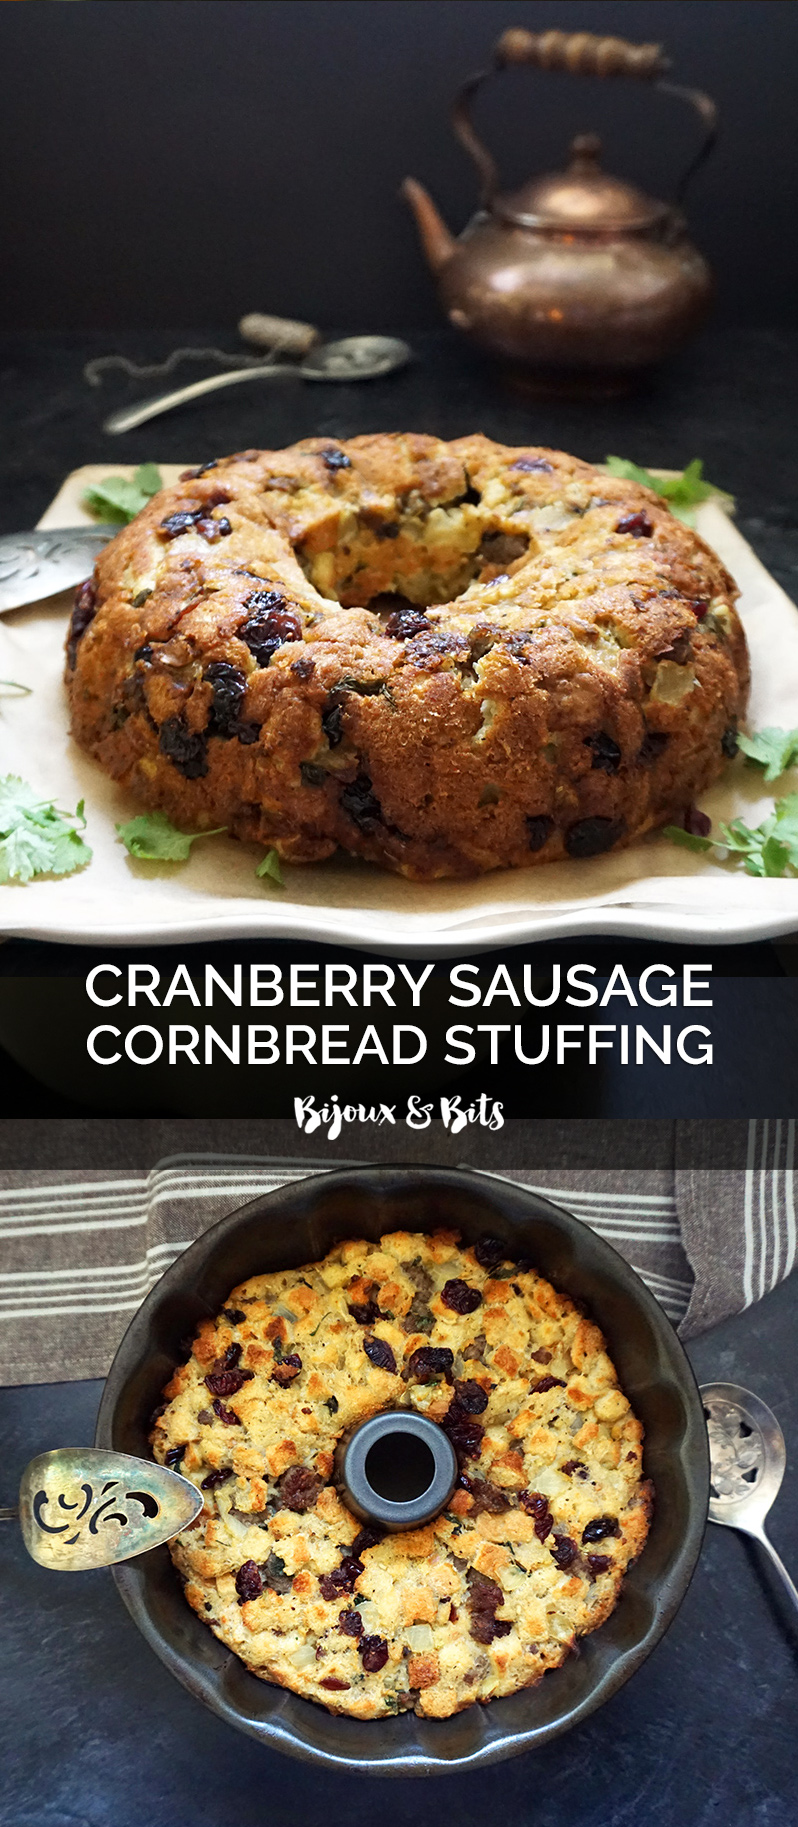 Cranberry sausage cornbread stuffing recipe from @bijouxandbits